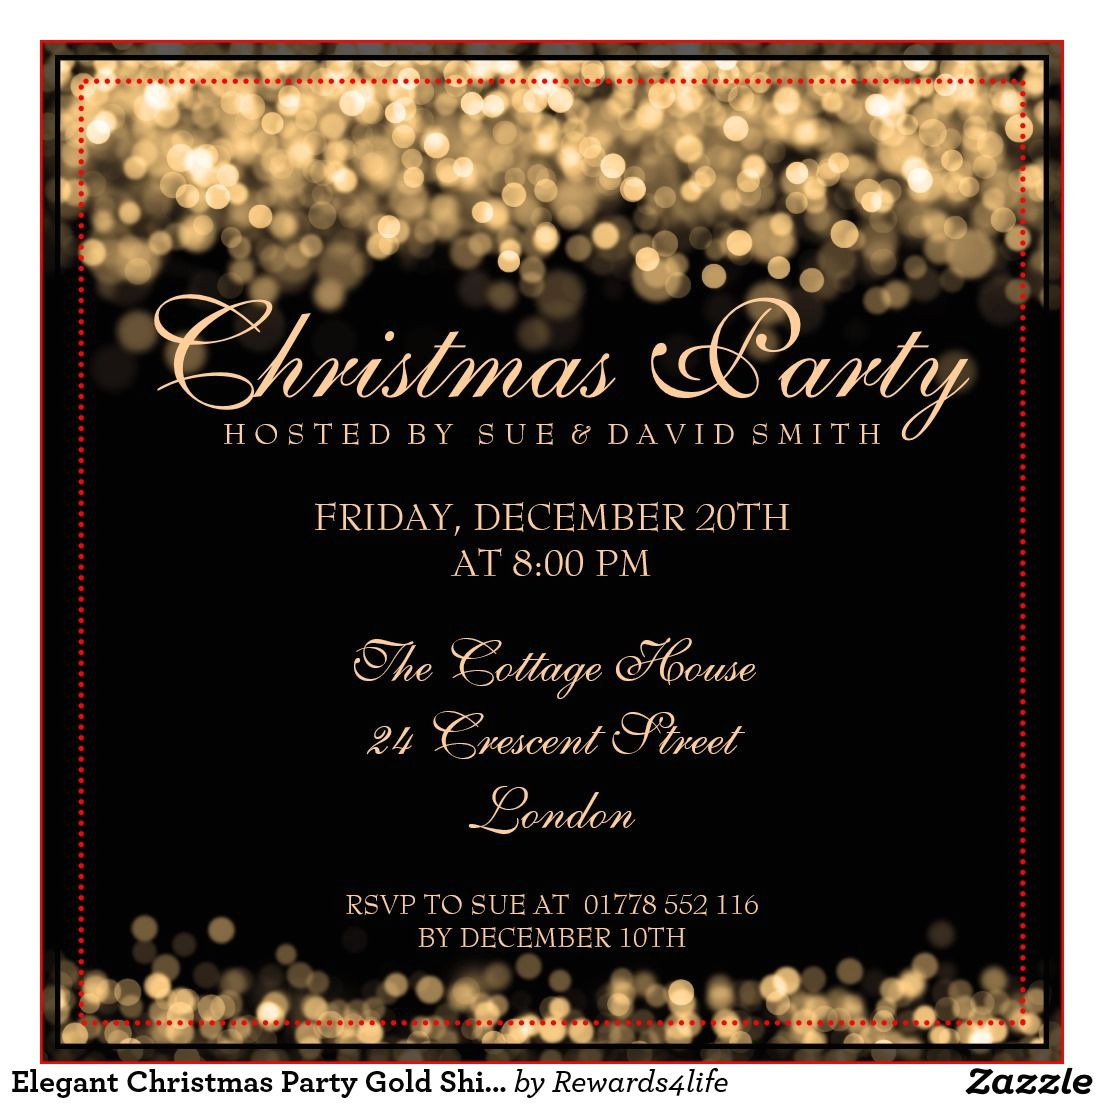 Elegant Holiday Party Invitation Template Doc 11041104 Office Christmas Party Invitation Templates